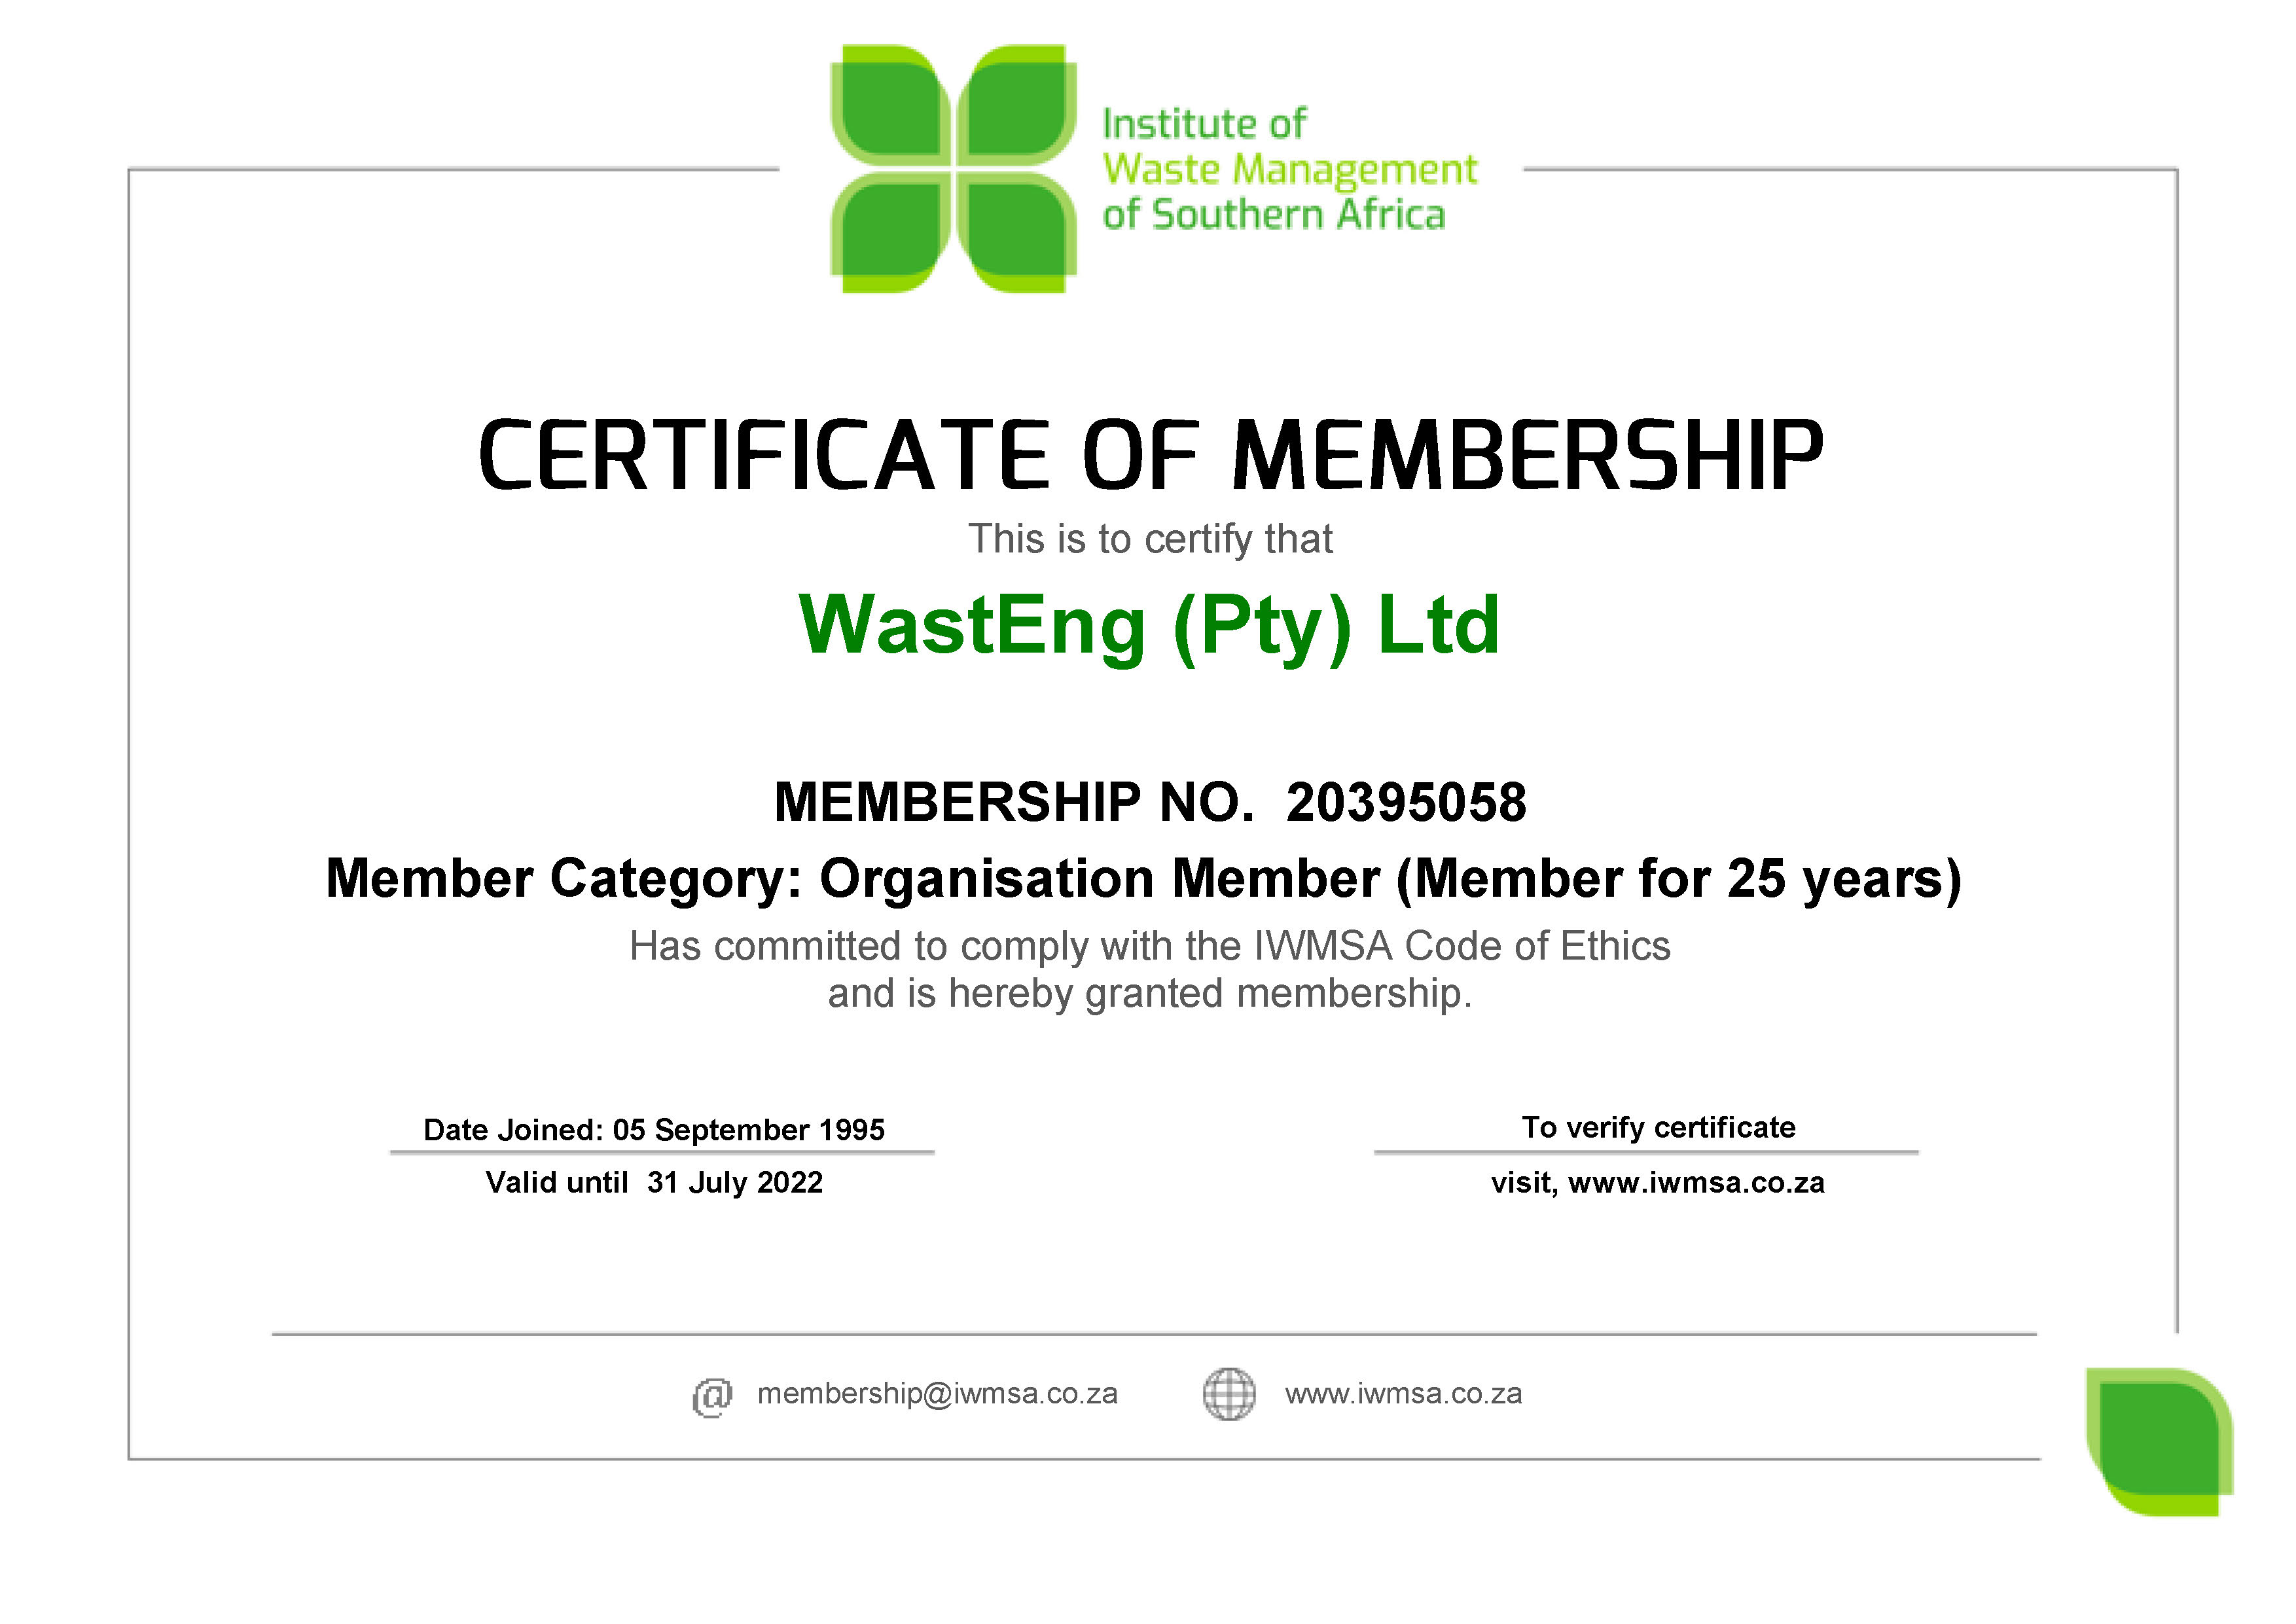 WastEng (Pty) Ltd (20395058) MembershipCertificate